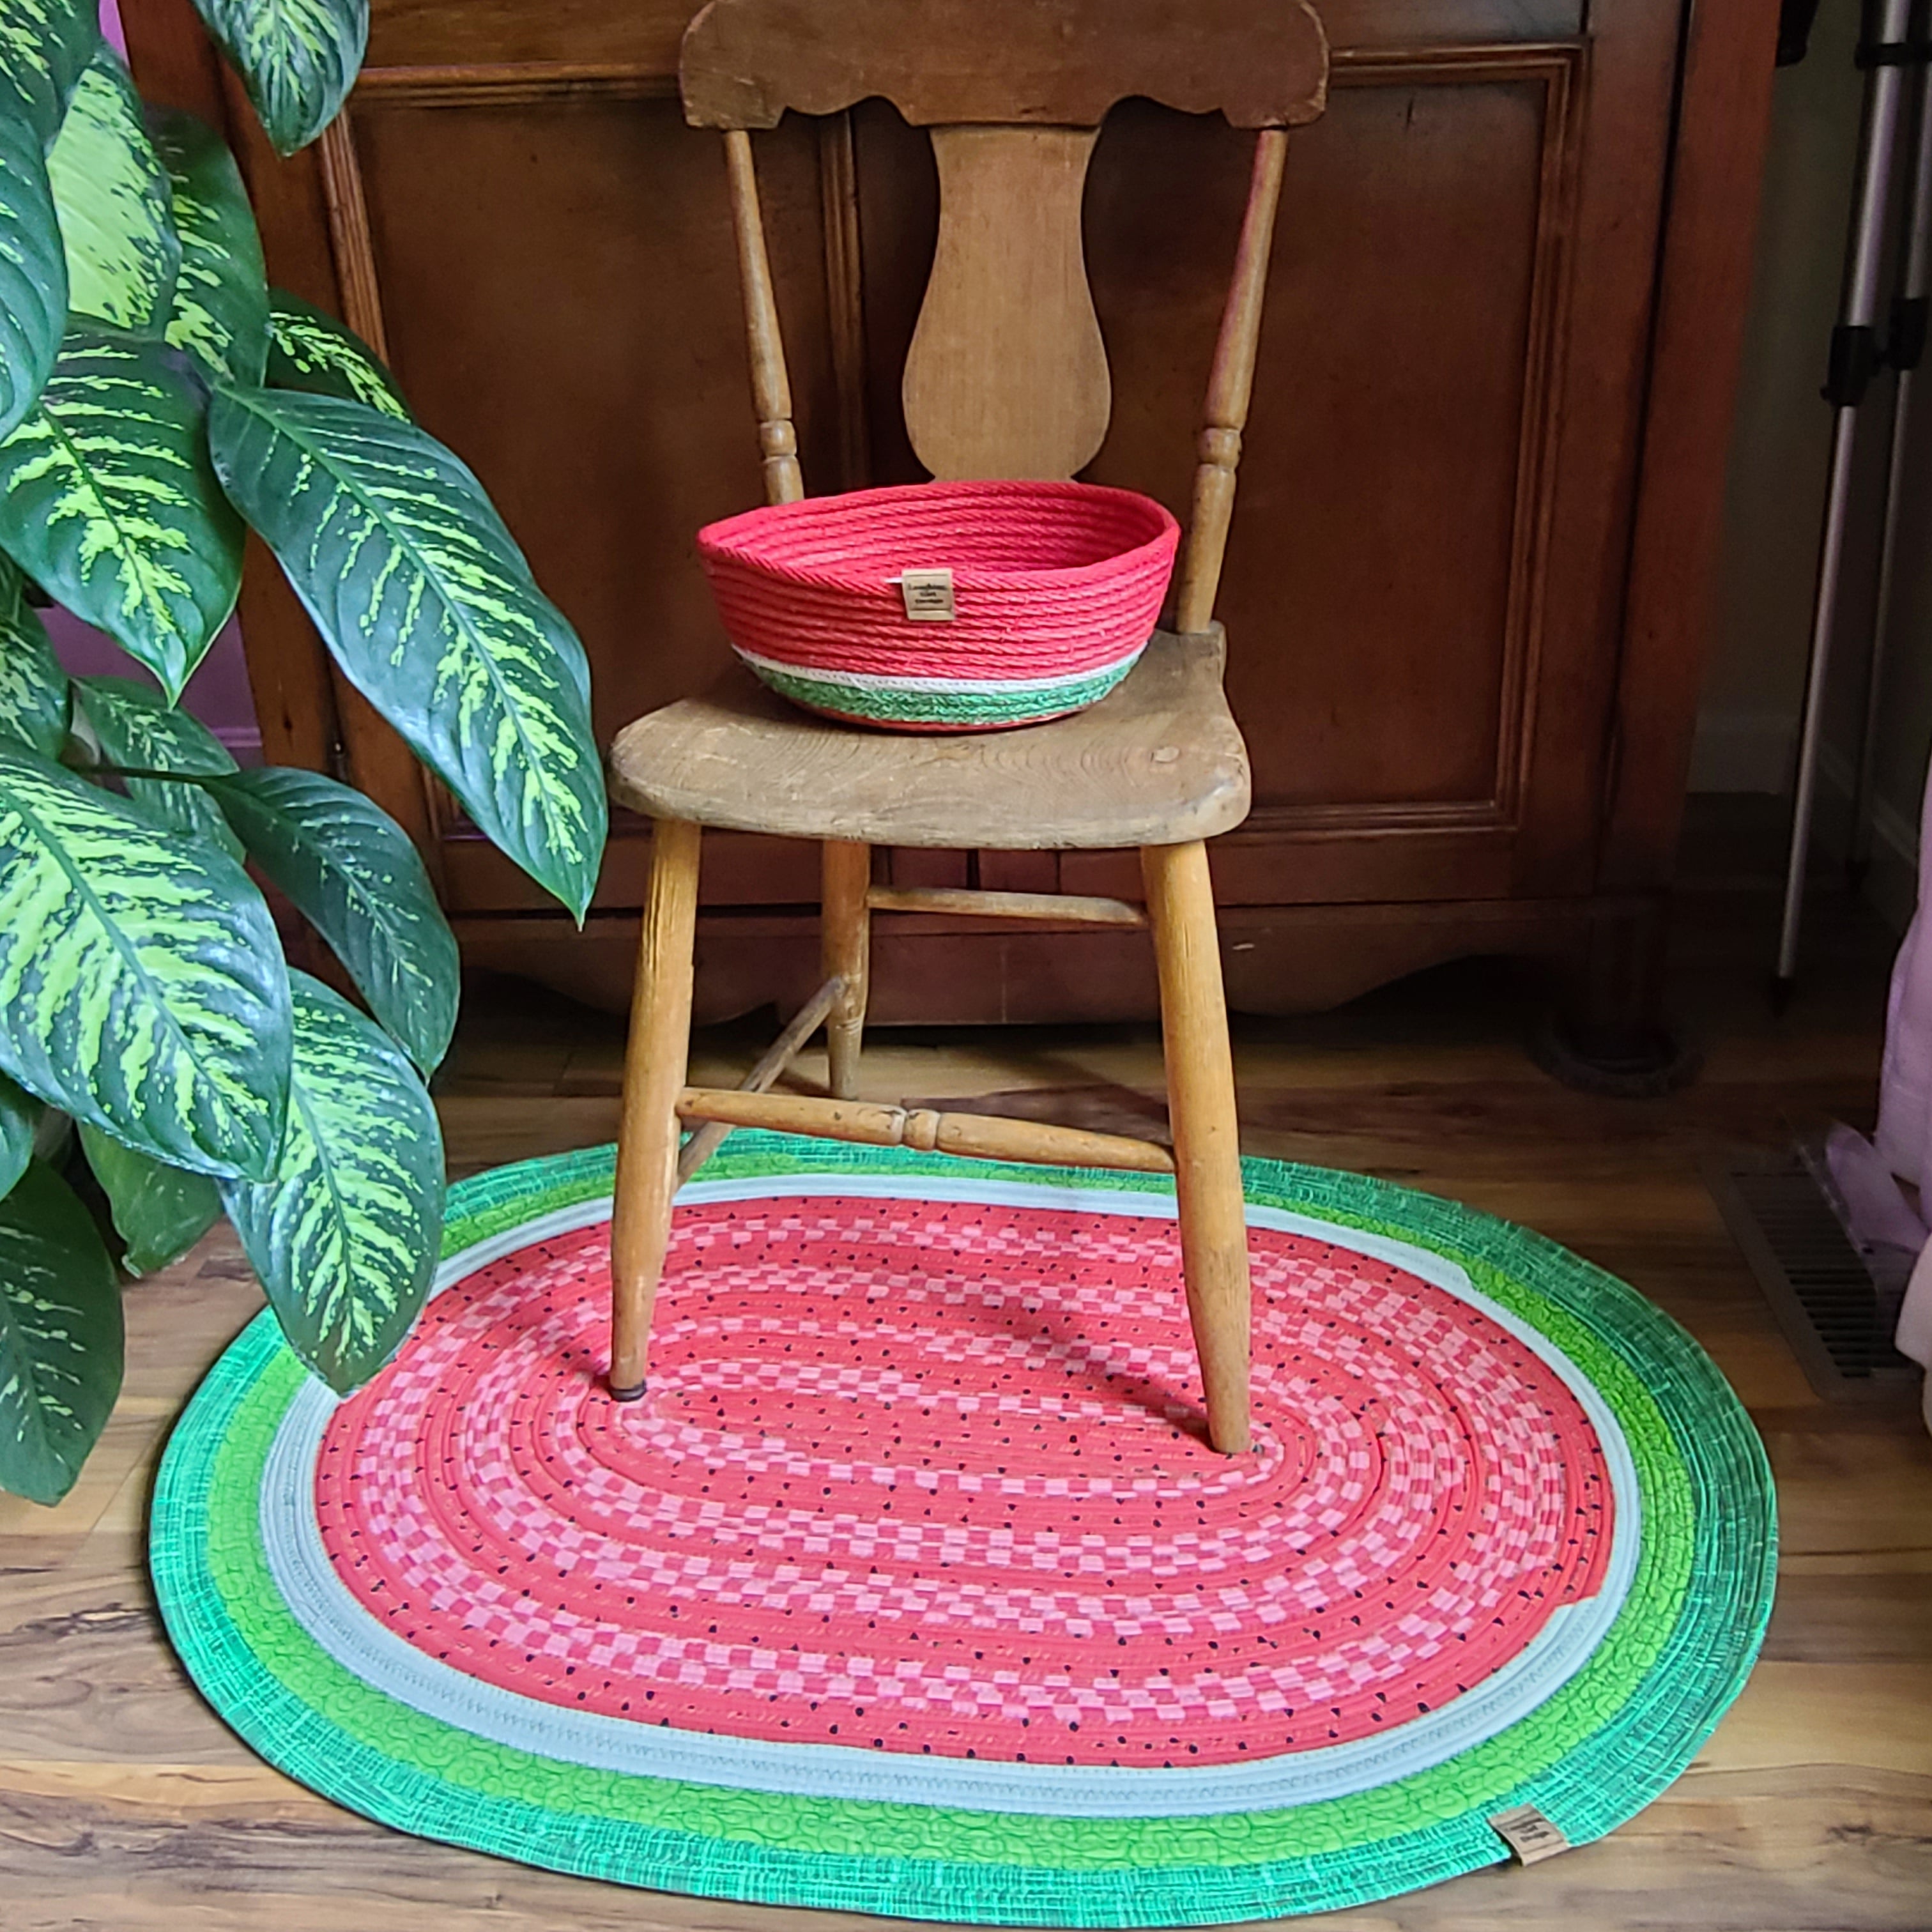 Watermelon Jelly Roll rug